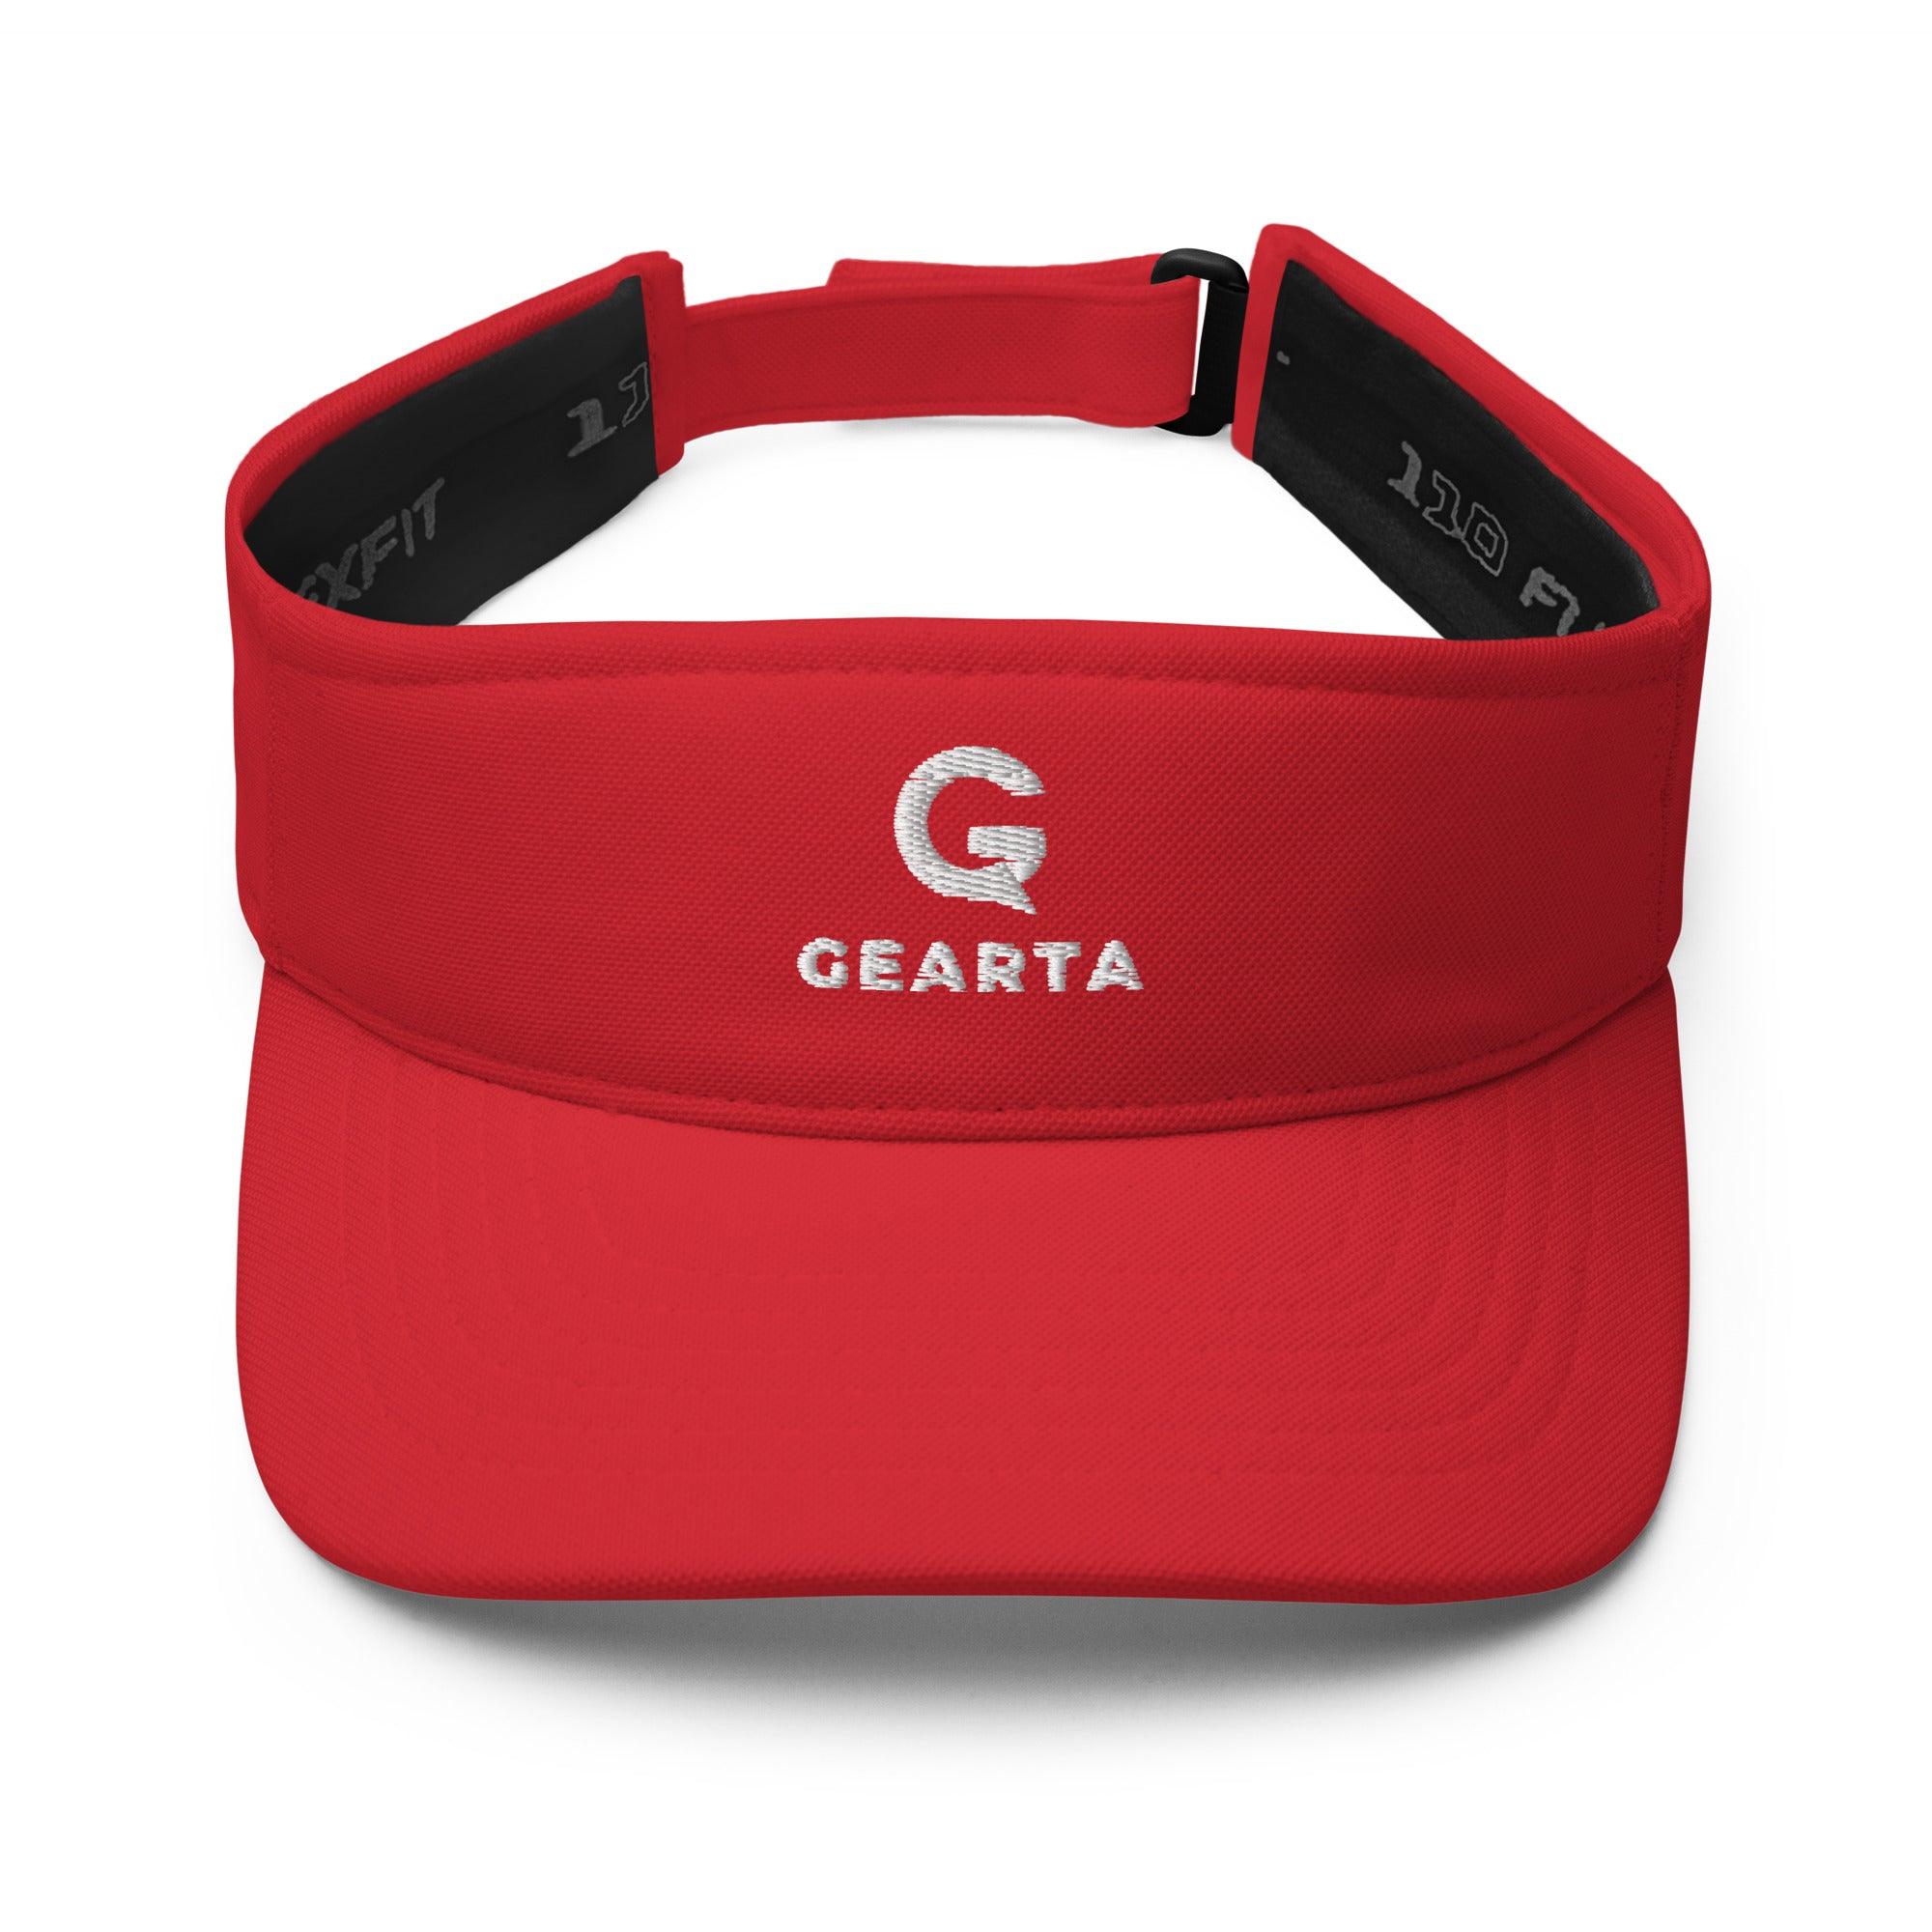 GEARTA - Sun Visor Cap in a Standout Red Color